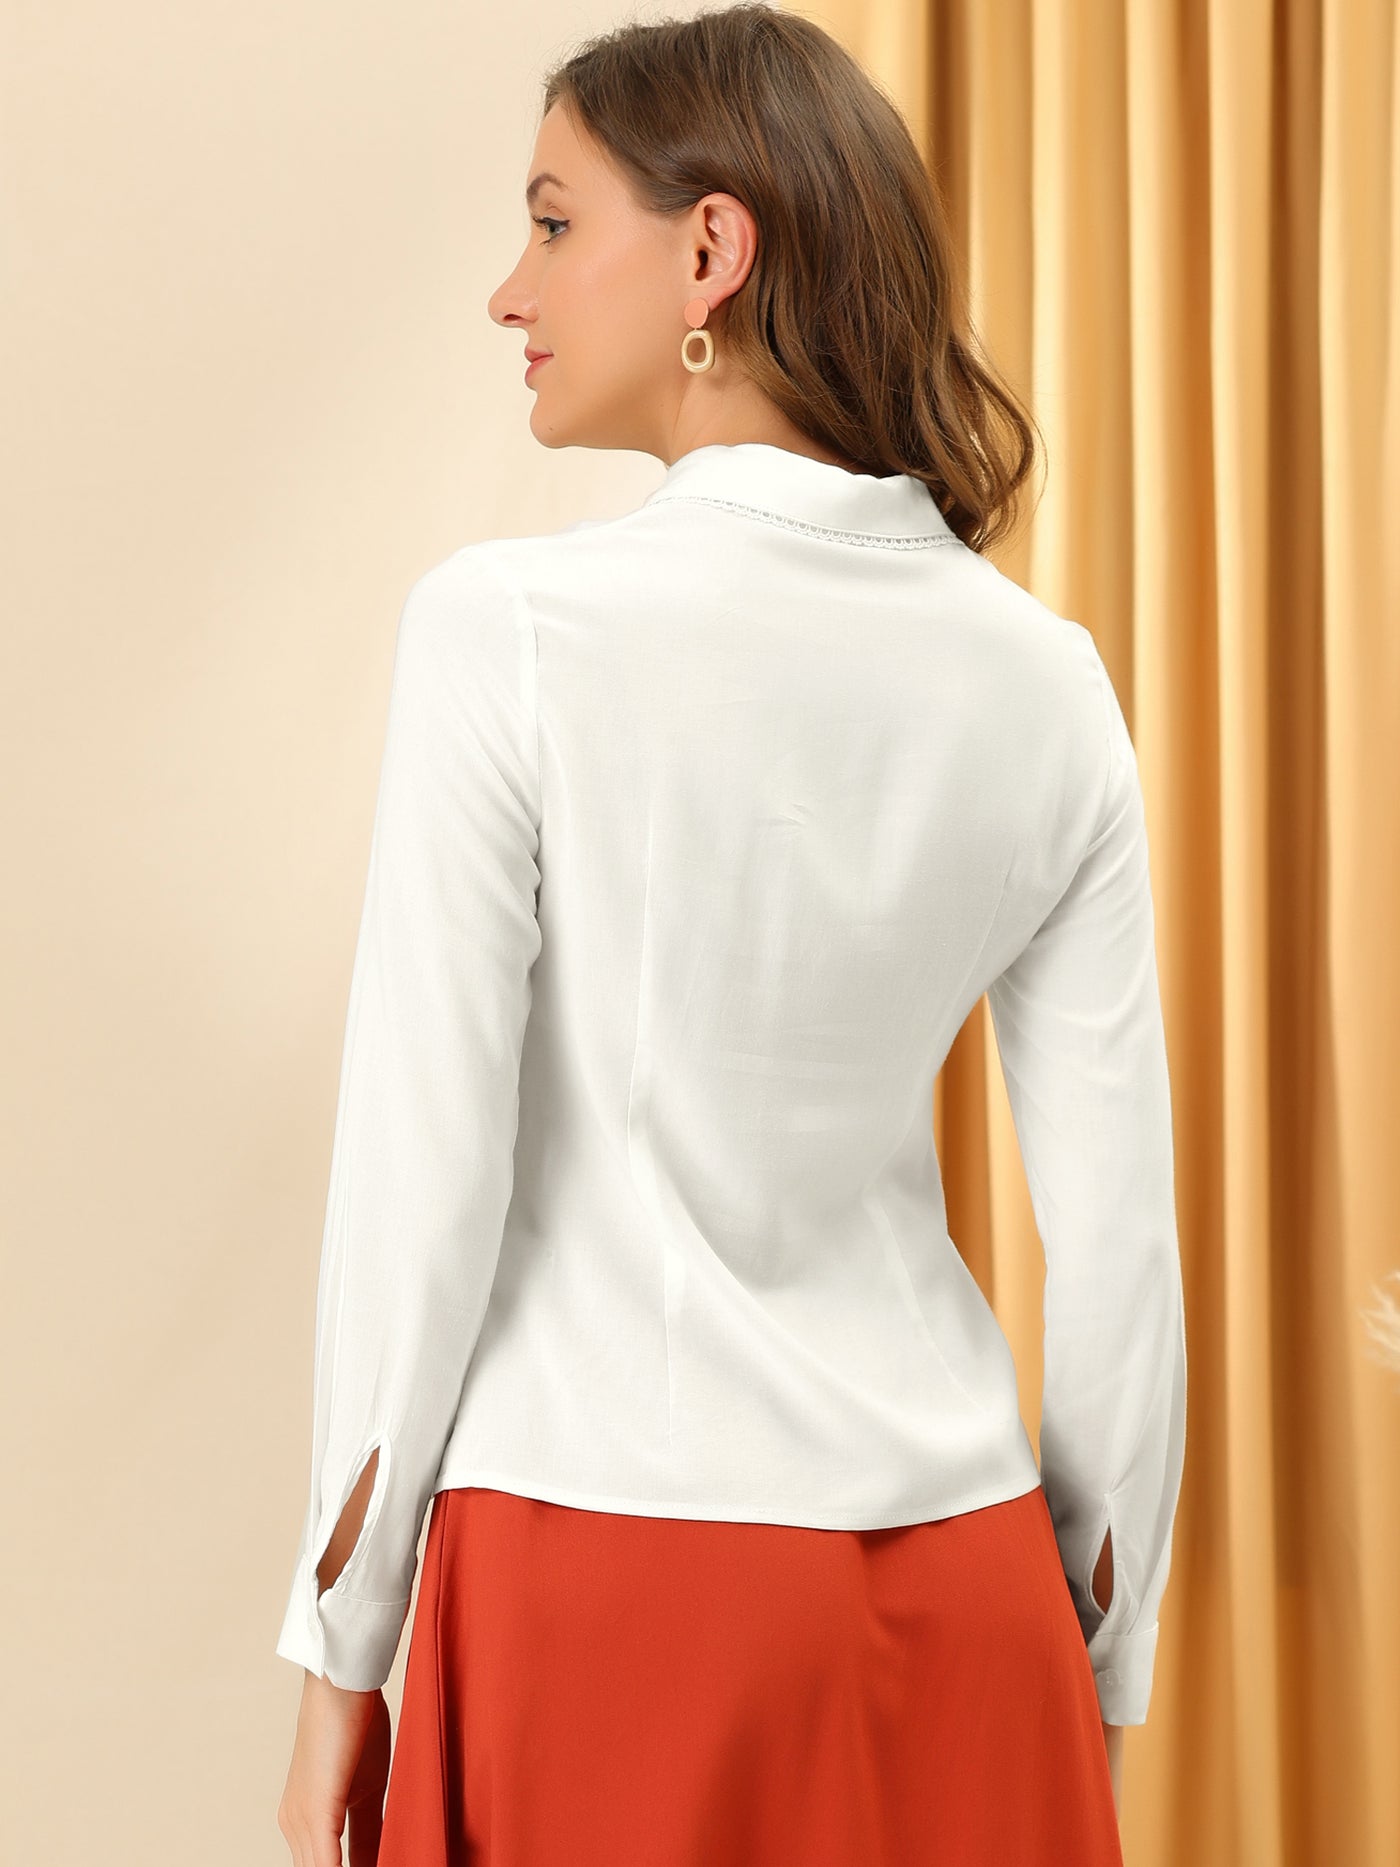 Allegra K Peter Pan Collar Top Elegant Button Blouse Work Shirt